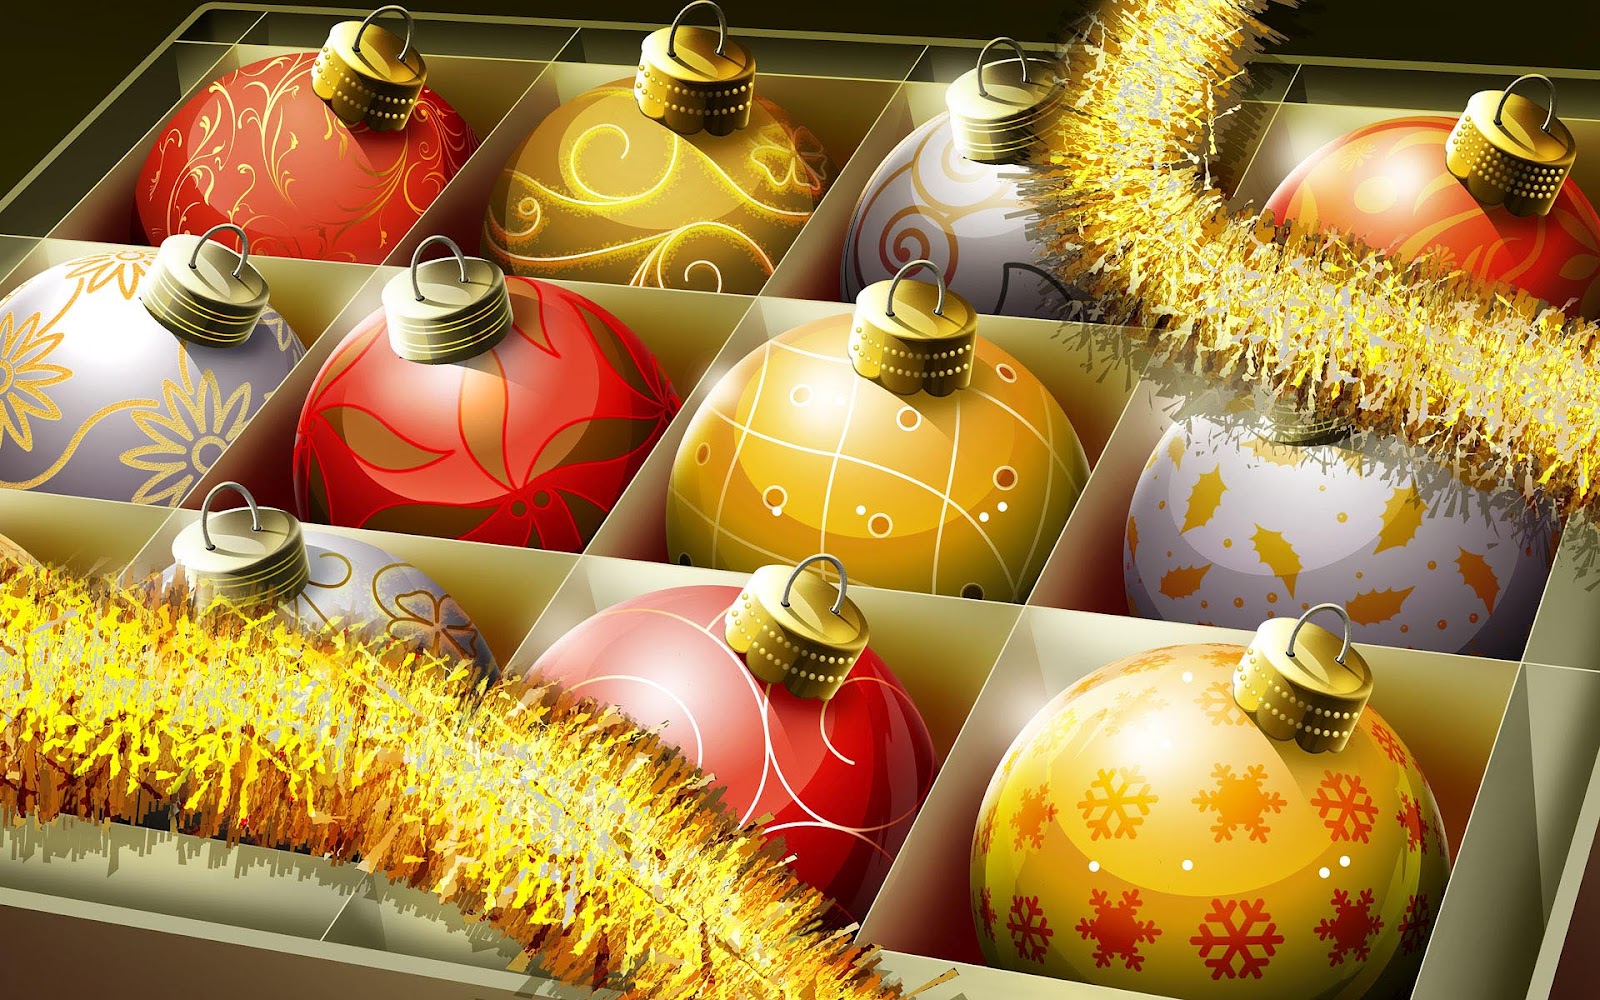 http://4.bp.blogspot.com/-72EfOBhe9ss/UDJ7KU03FhI/AAAAAAAAAmI/ybMFf-6B4Q0/s1600/hd-3d-kerstballen-wallpaper-met-rode-en-gele-3d-kerstballen-achtergrond.jpg